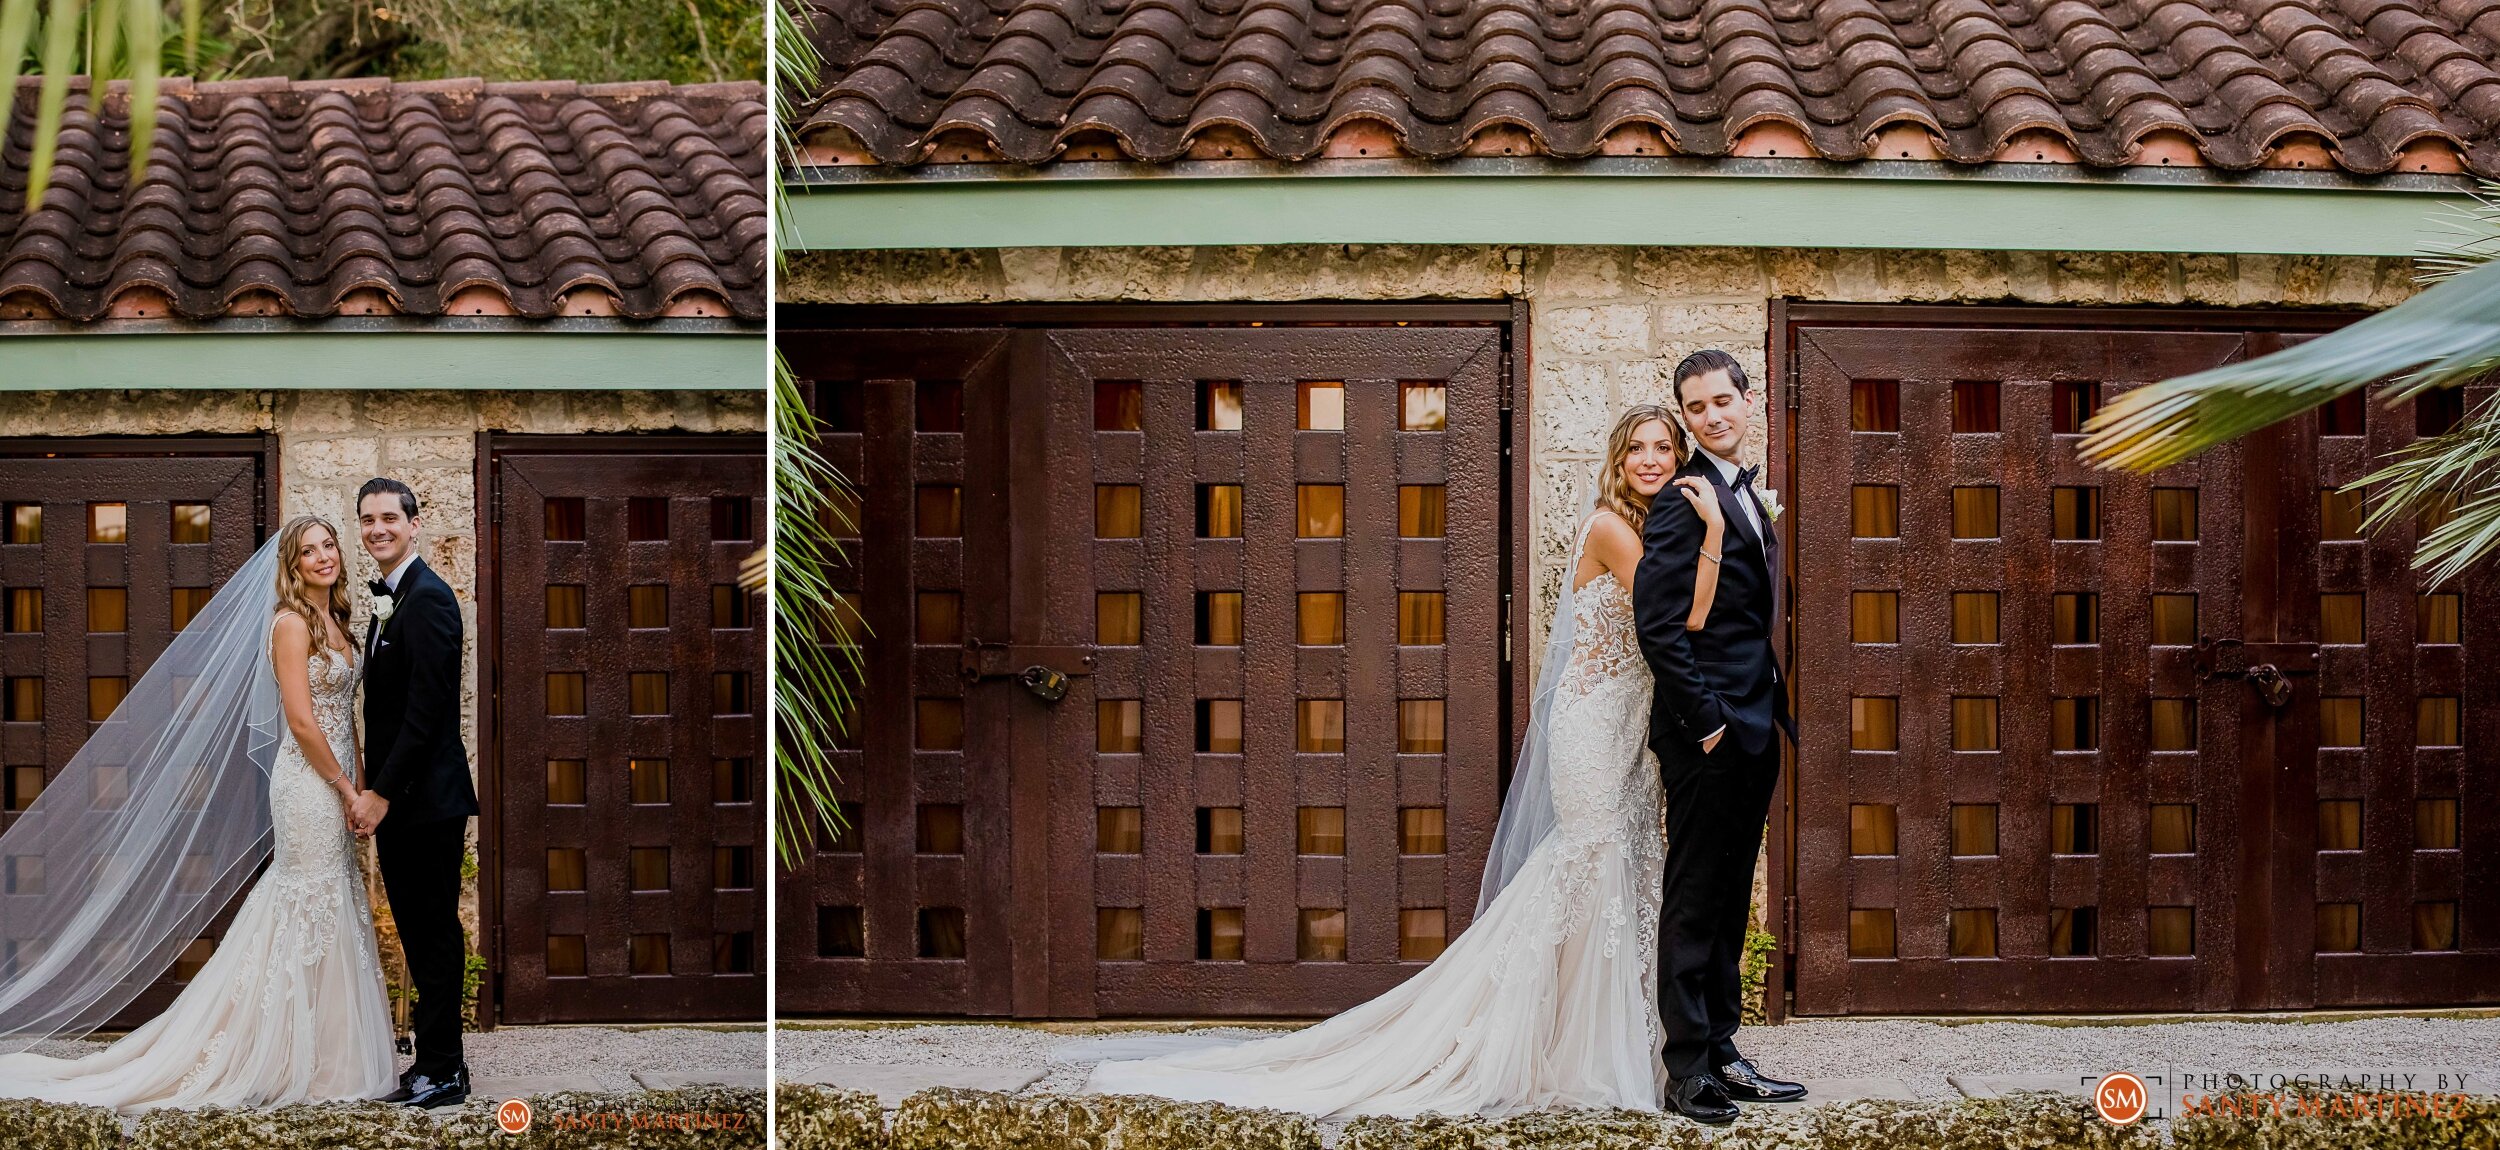 Wedding - The Cooper Estate - Photography by Santy Martinez 21.jpg